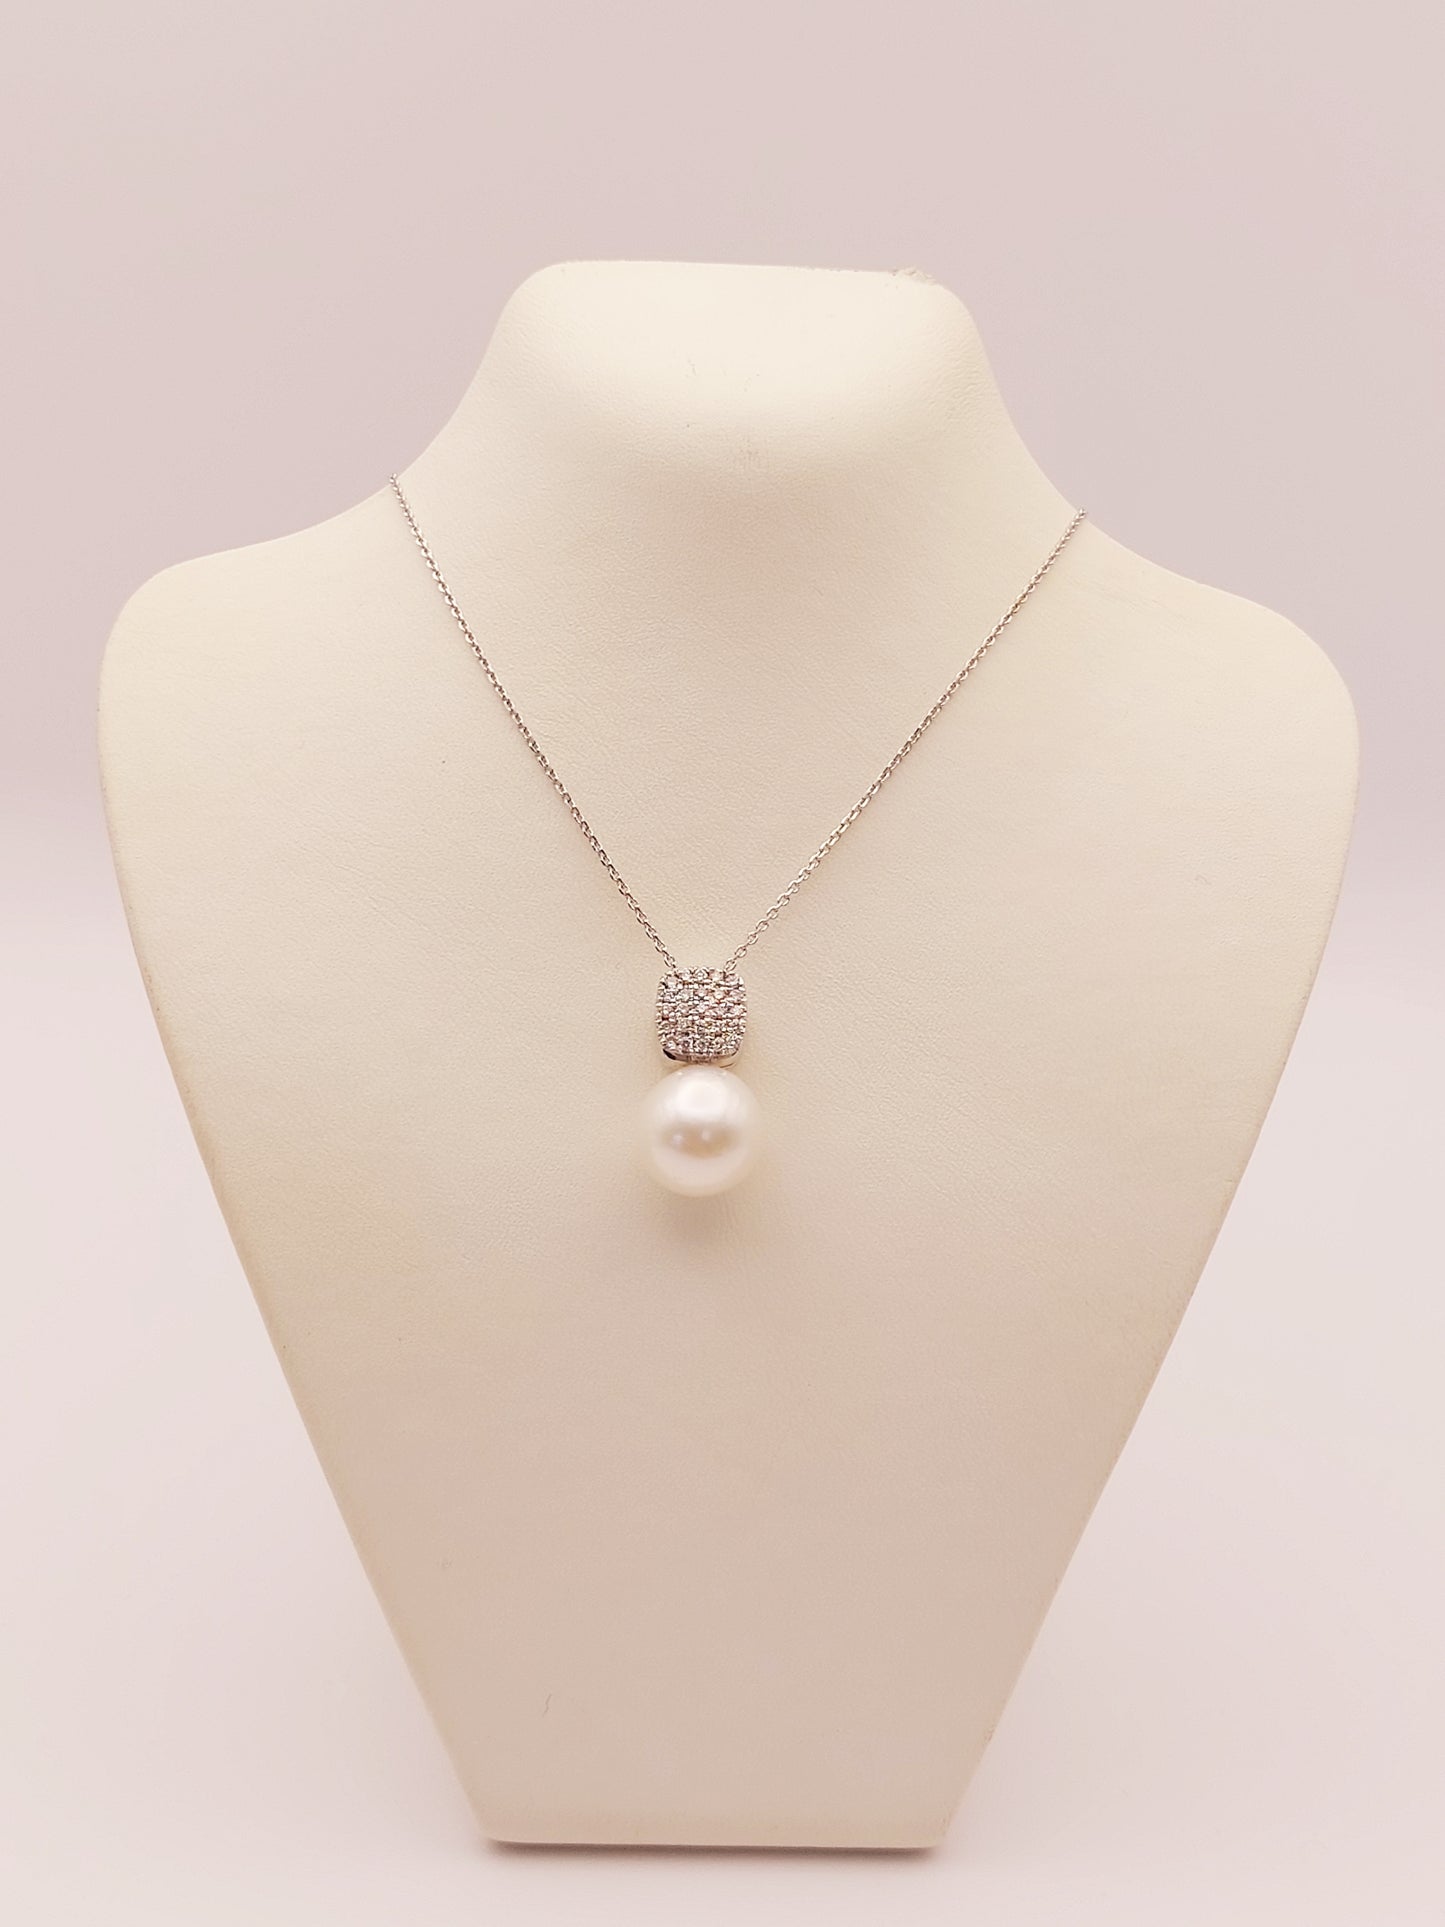 White South Sea Pearl pendant with diamonds